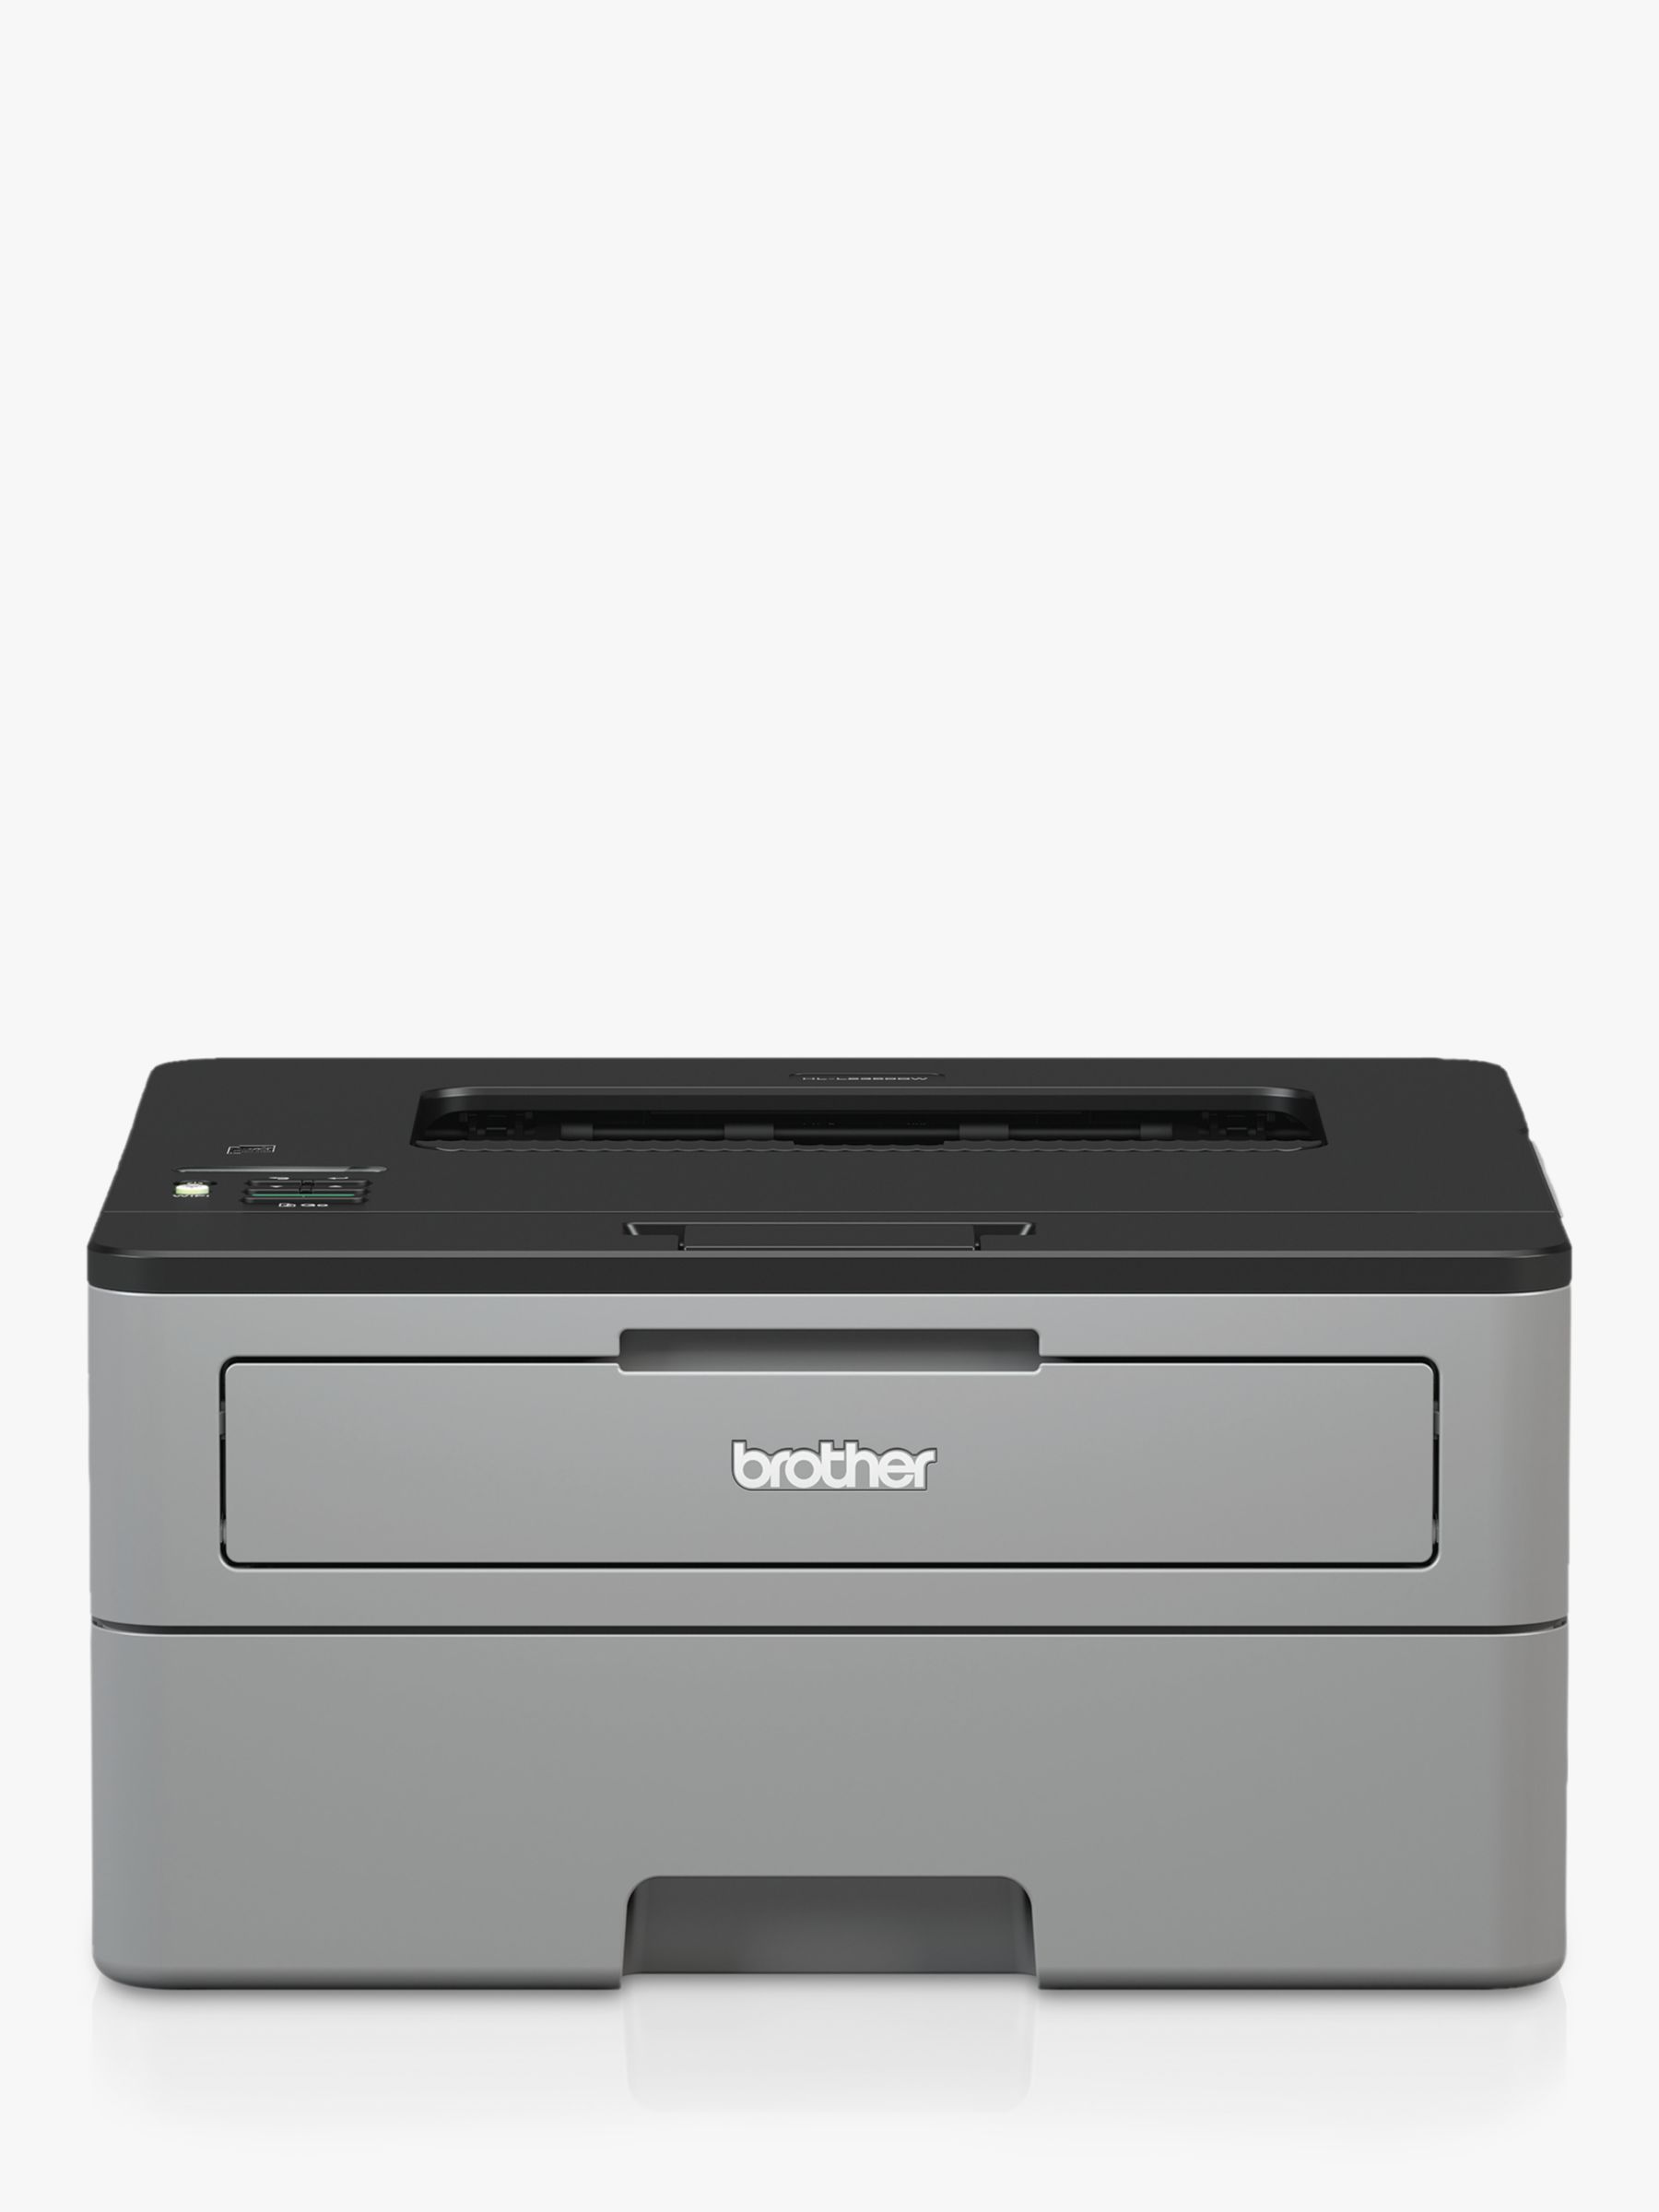 Review: Brother HL-L2350DW Monochrome Laser Printer